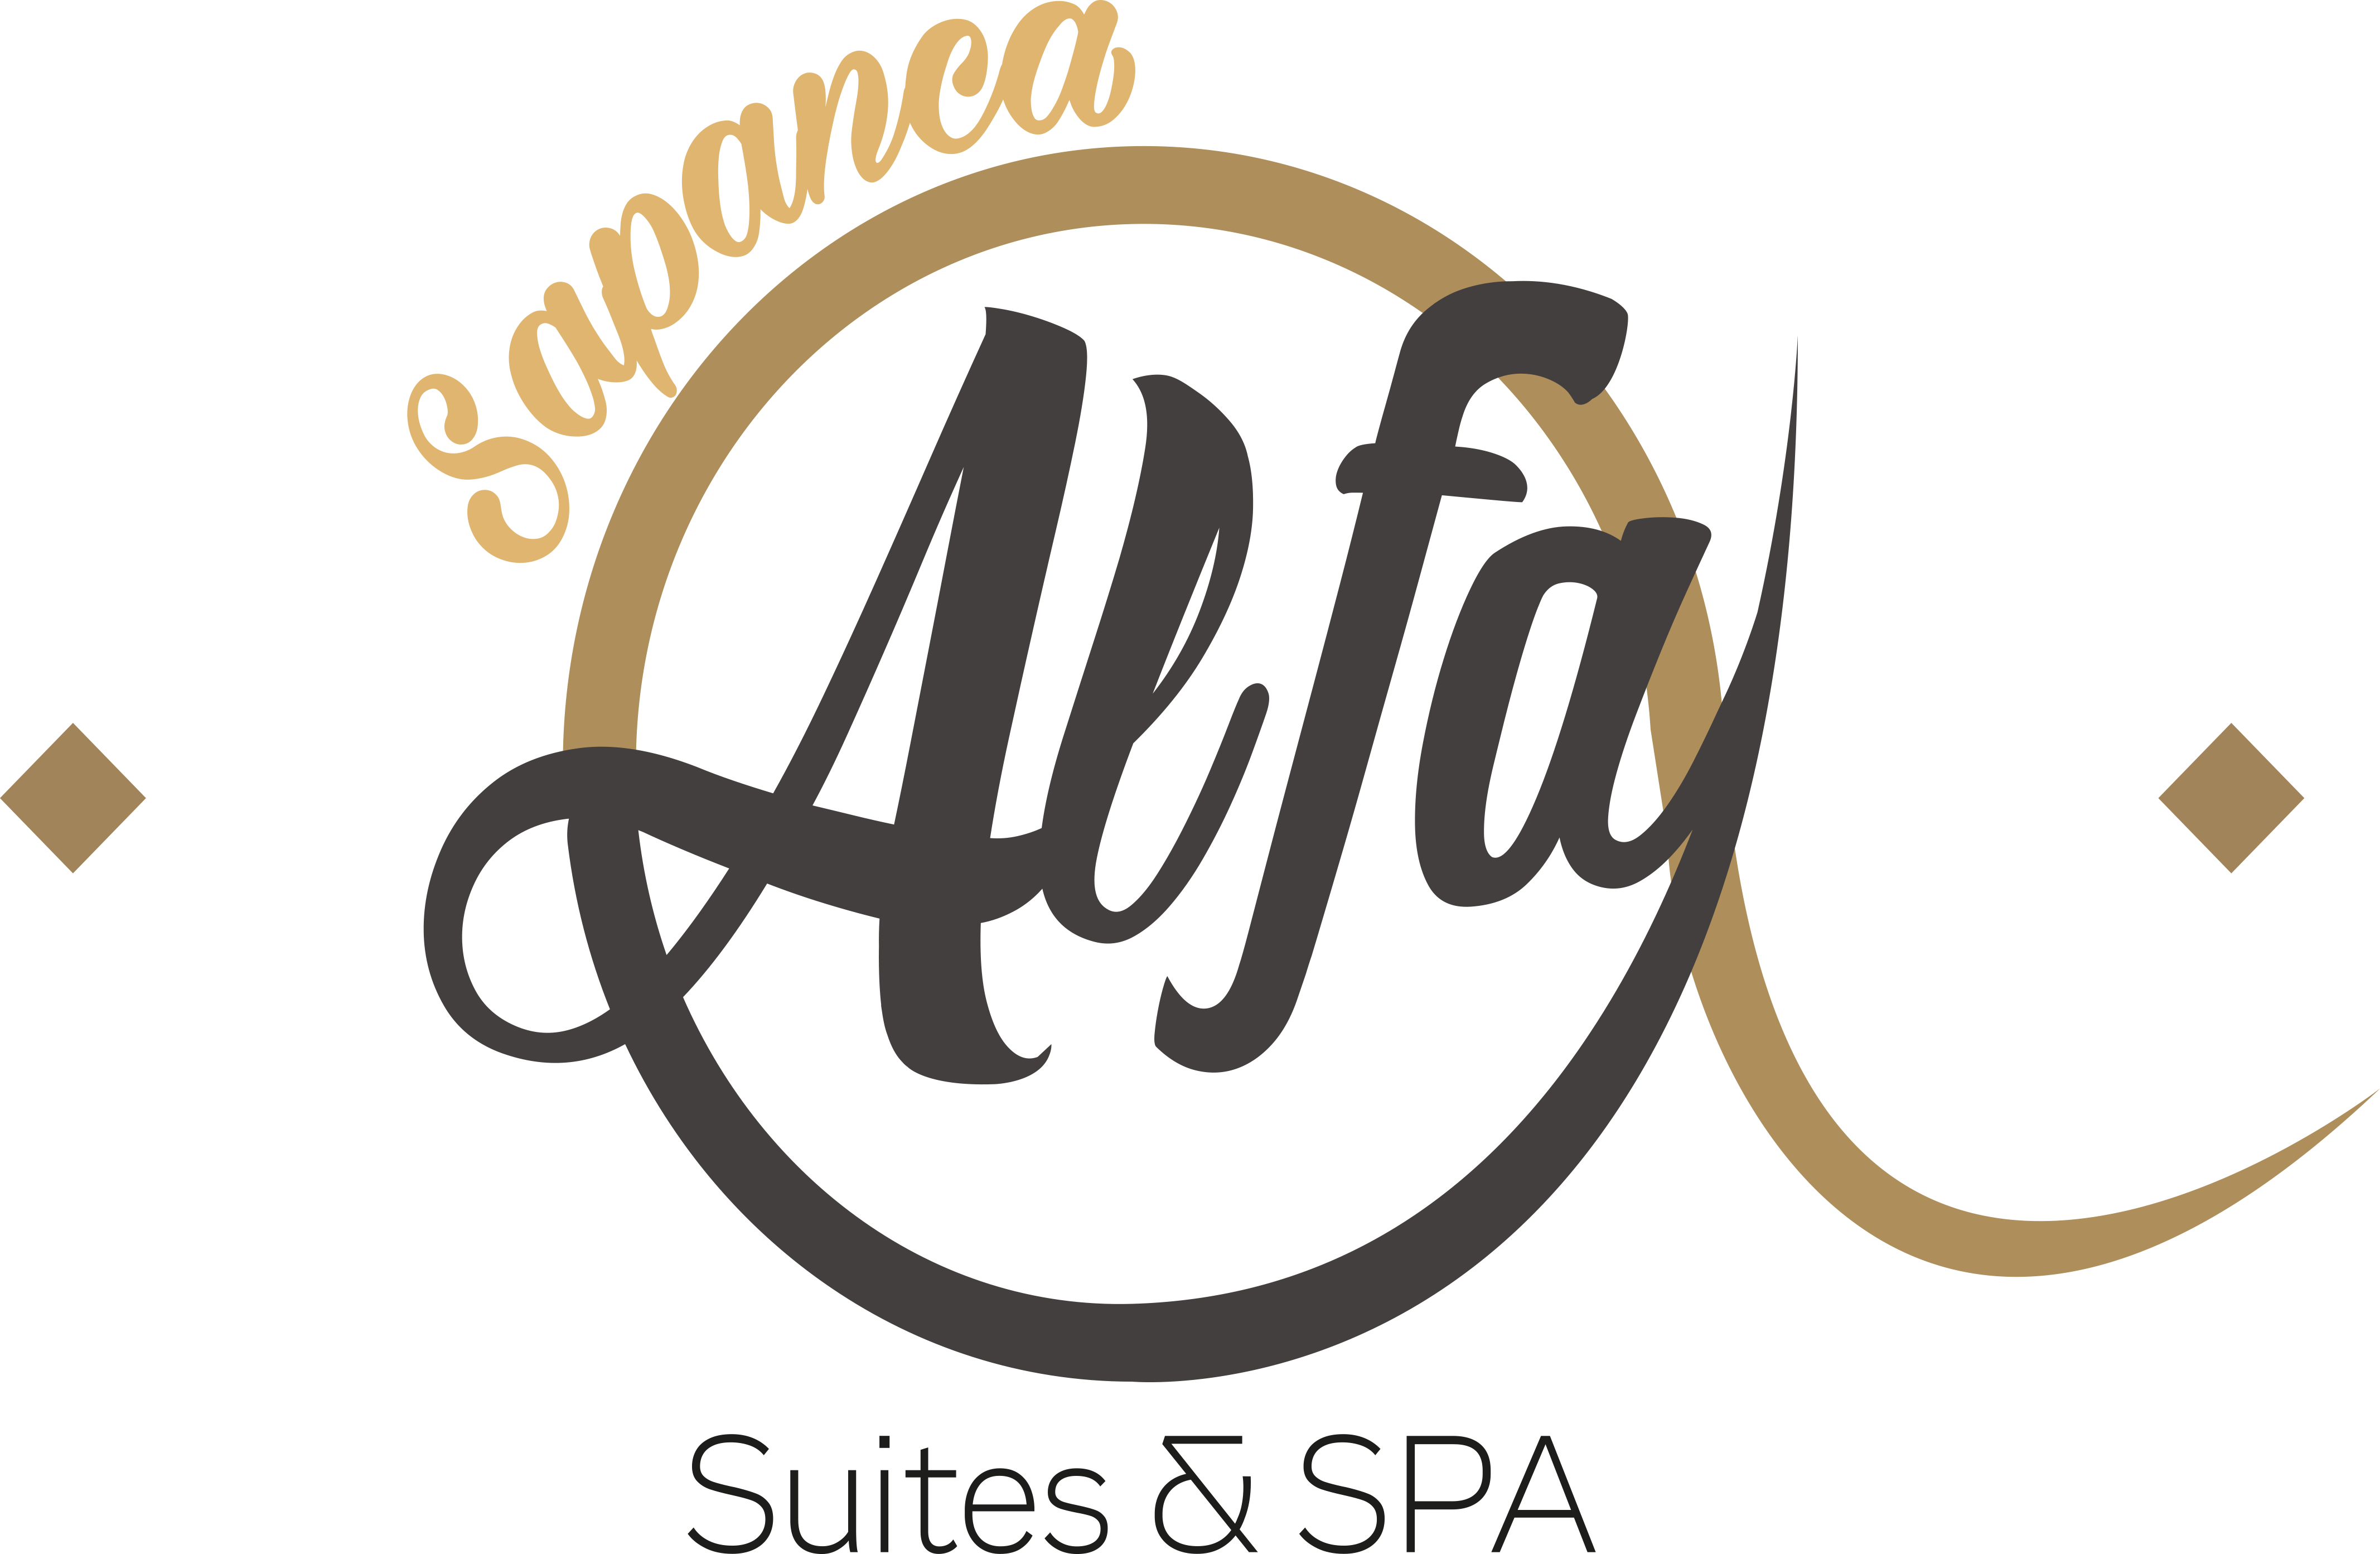 Sapanca Alfa Suites & SPA